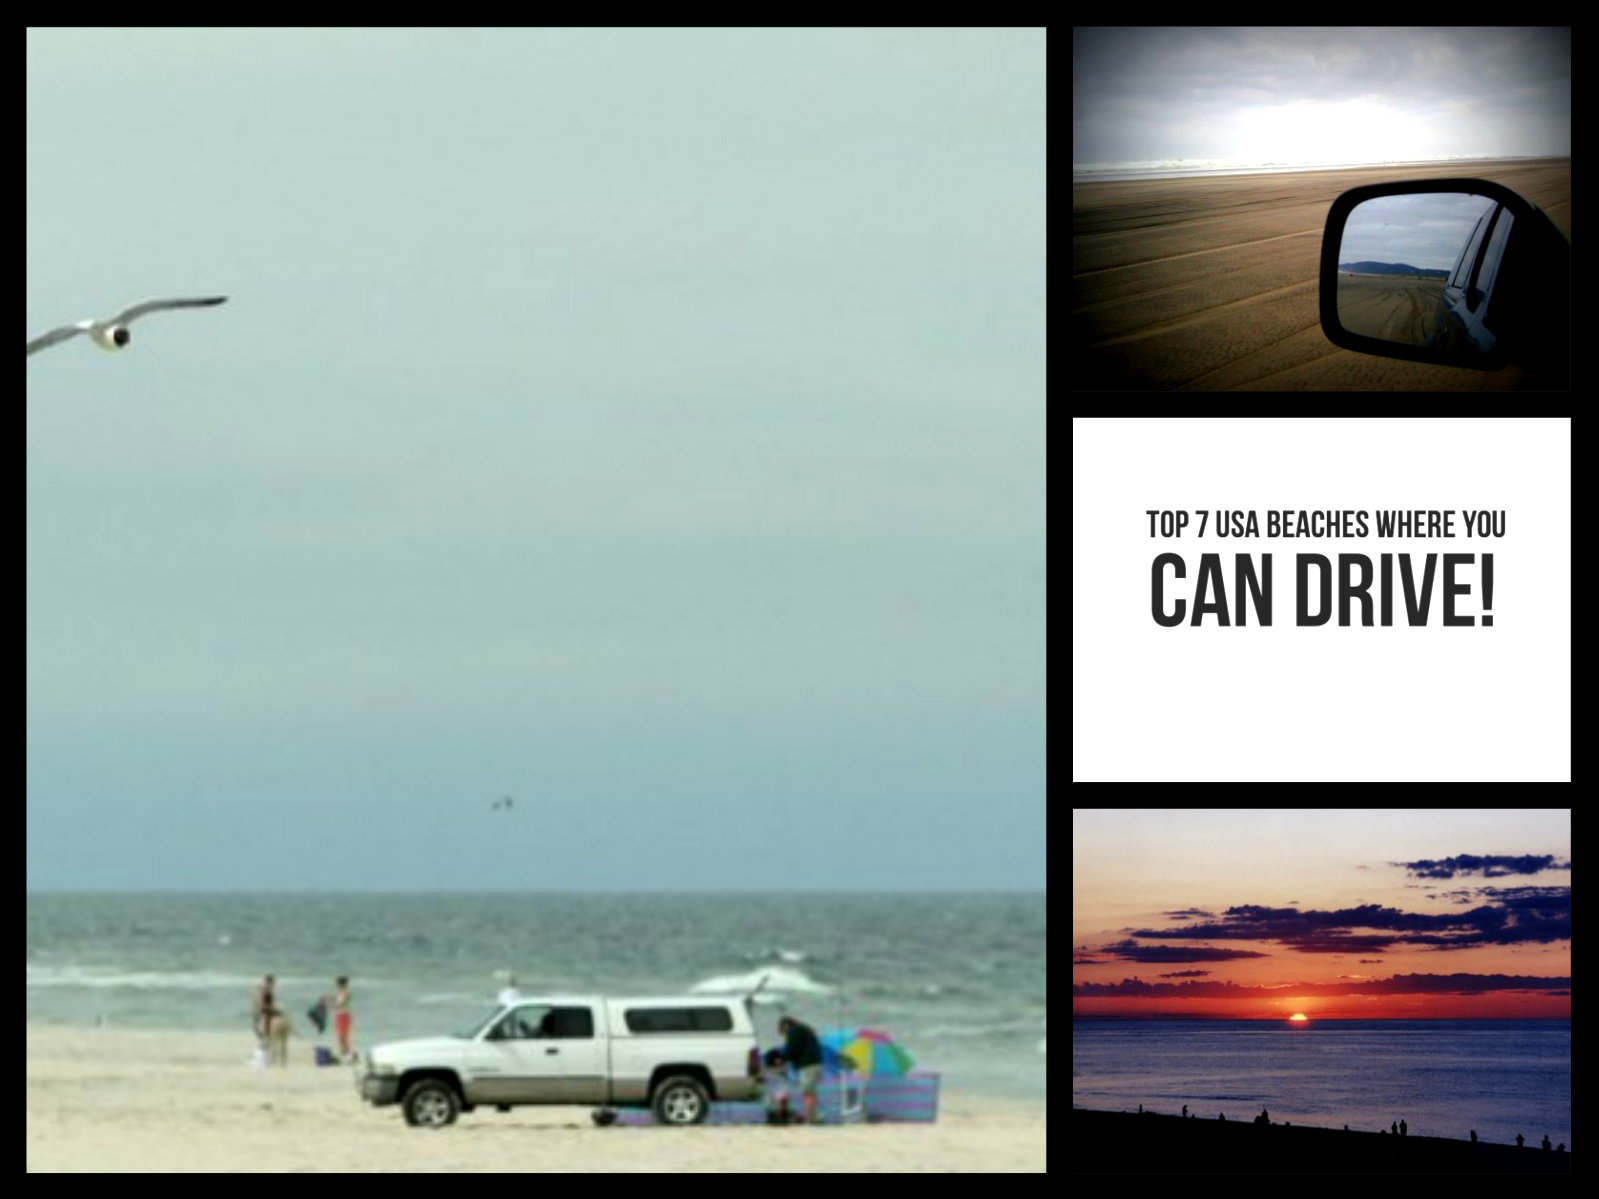 Top 7 USA beaches where you can drive!